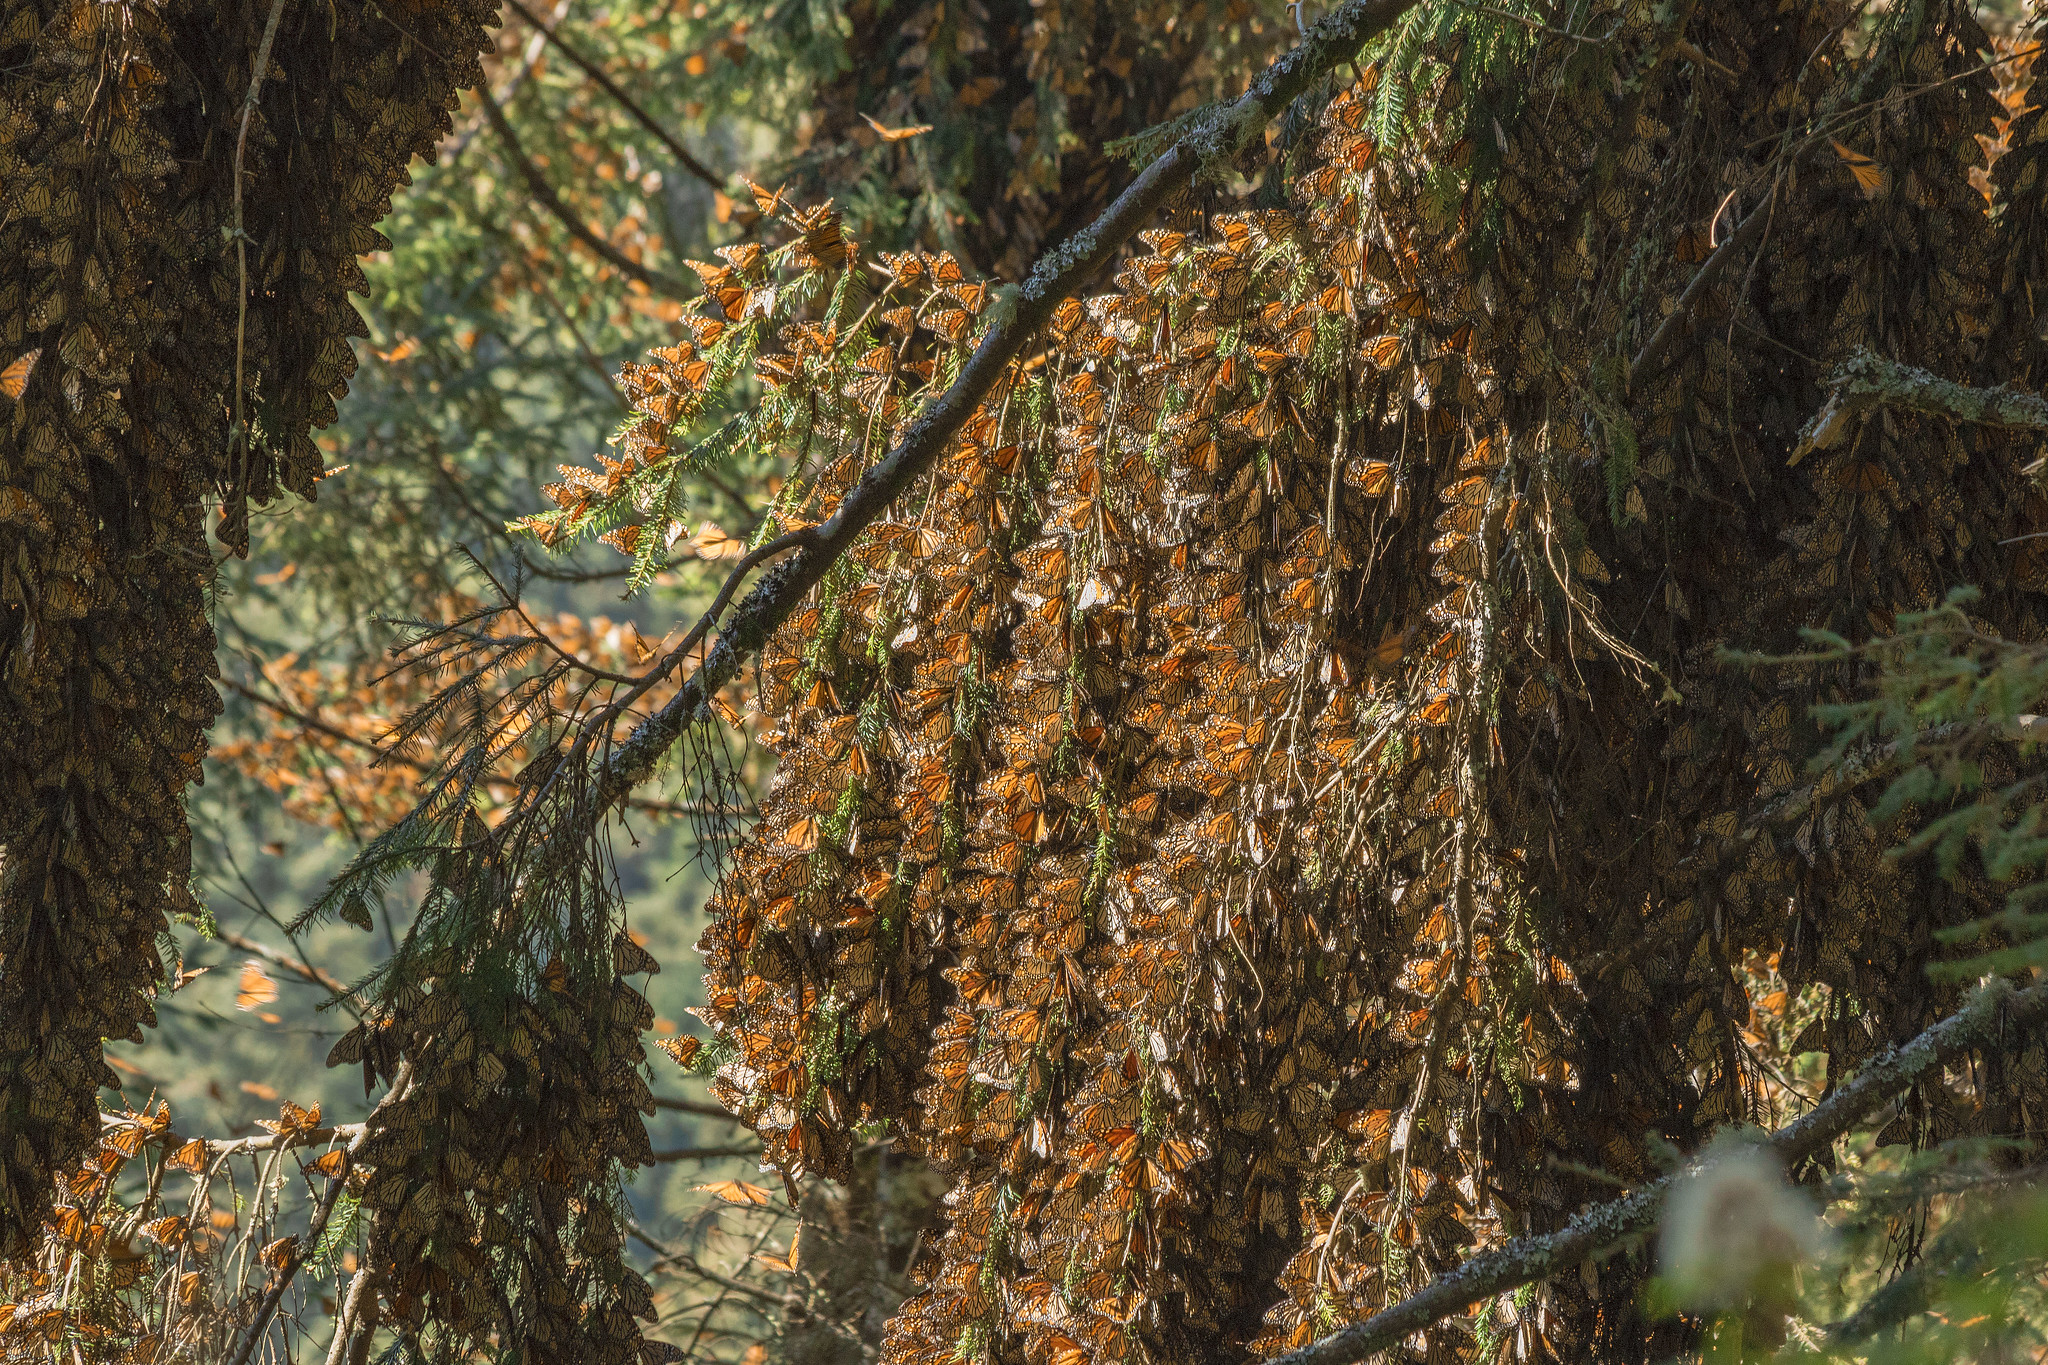 Monarchs rest en masse on conifer trees